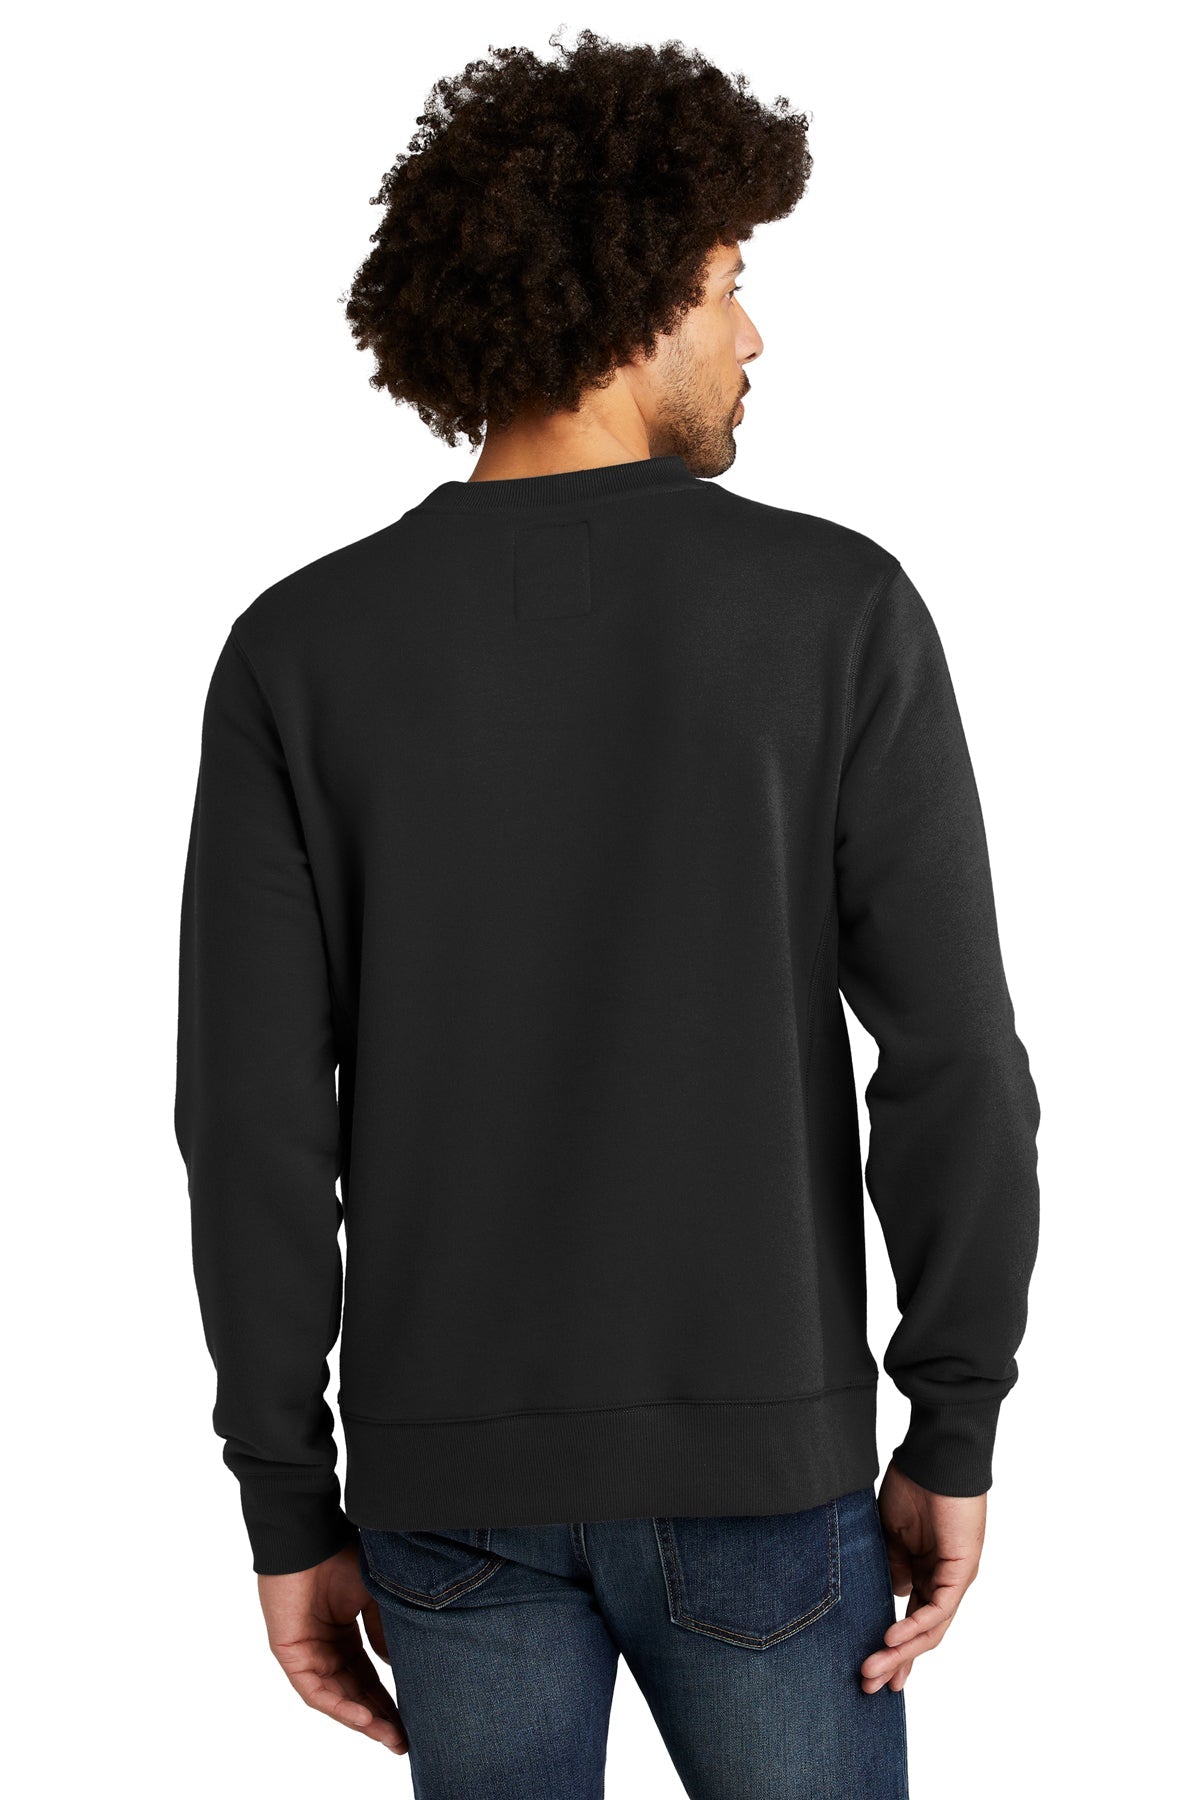 new era_nea501 _black_company_logo_sweatshirts